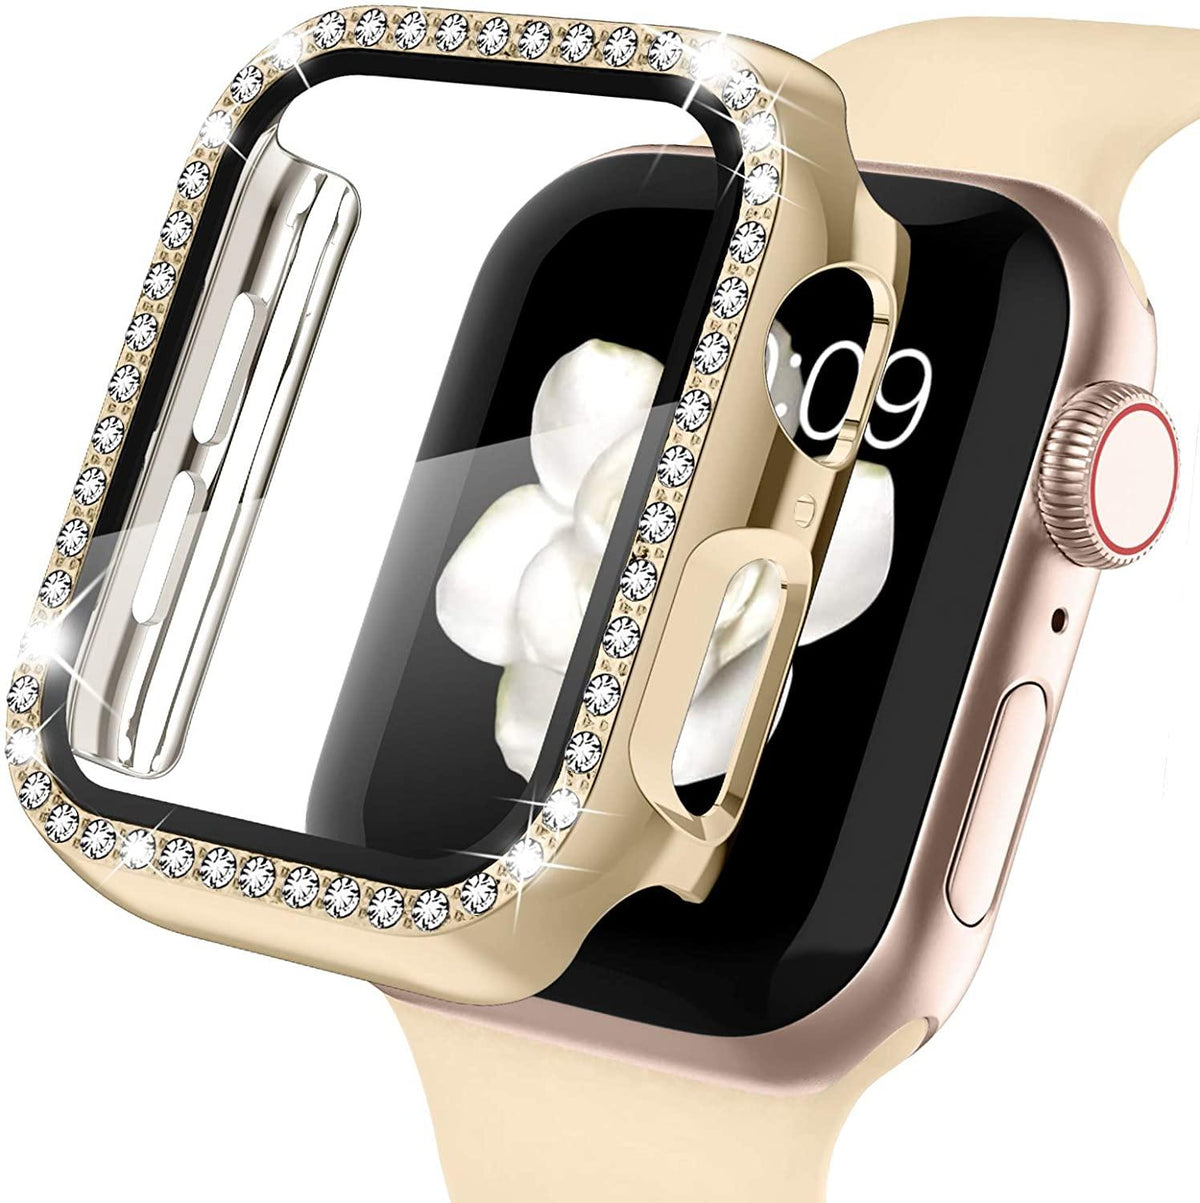 Diamond Apple Watch CaseCase Material: PlasticItem Type: Watch Cases[focus_keyword]Apple Phone CaseArleathercraft